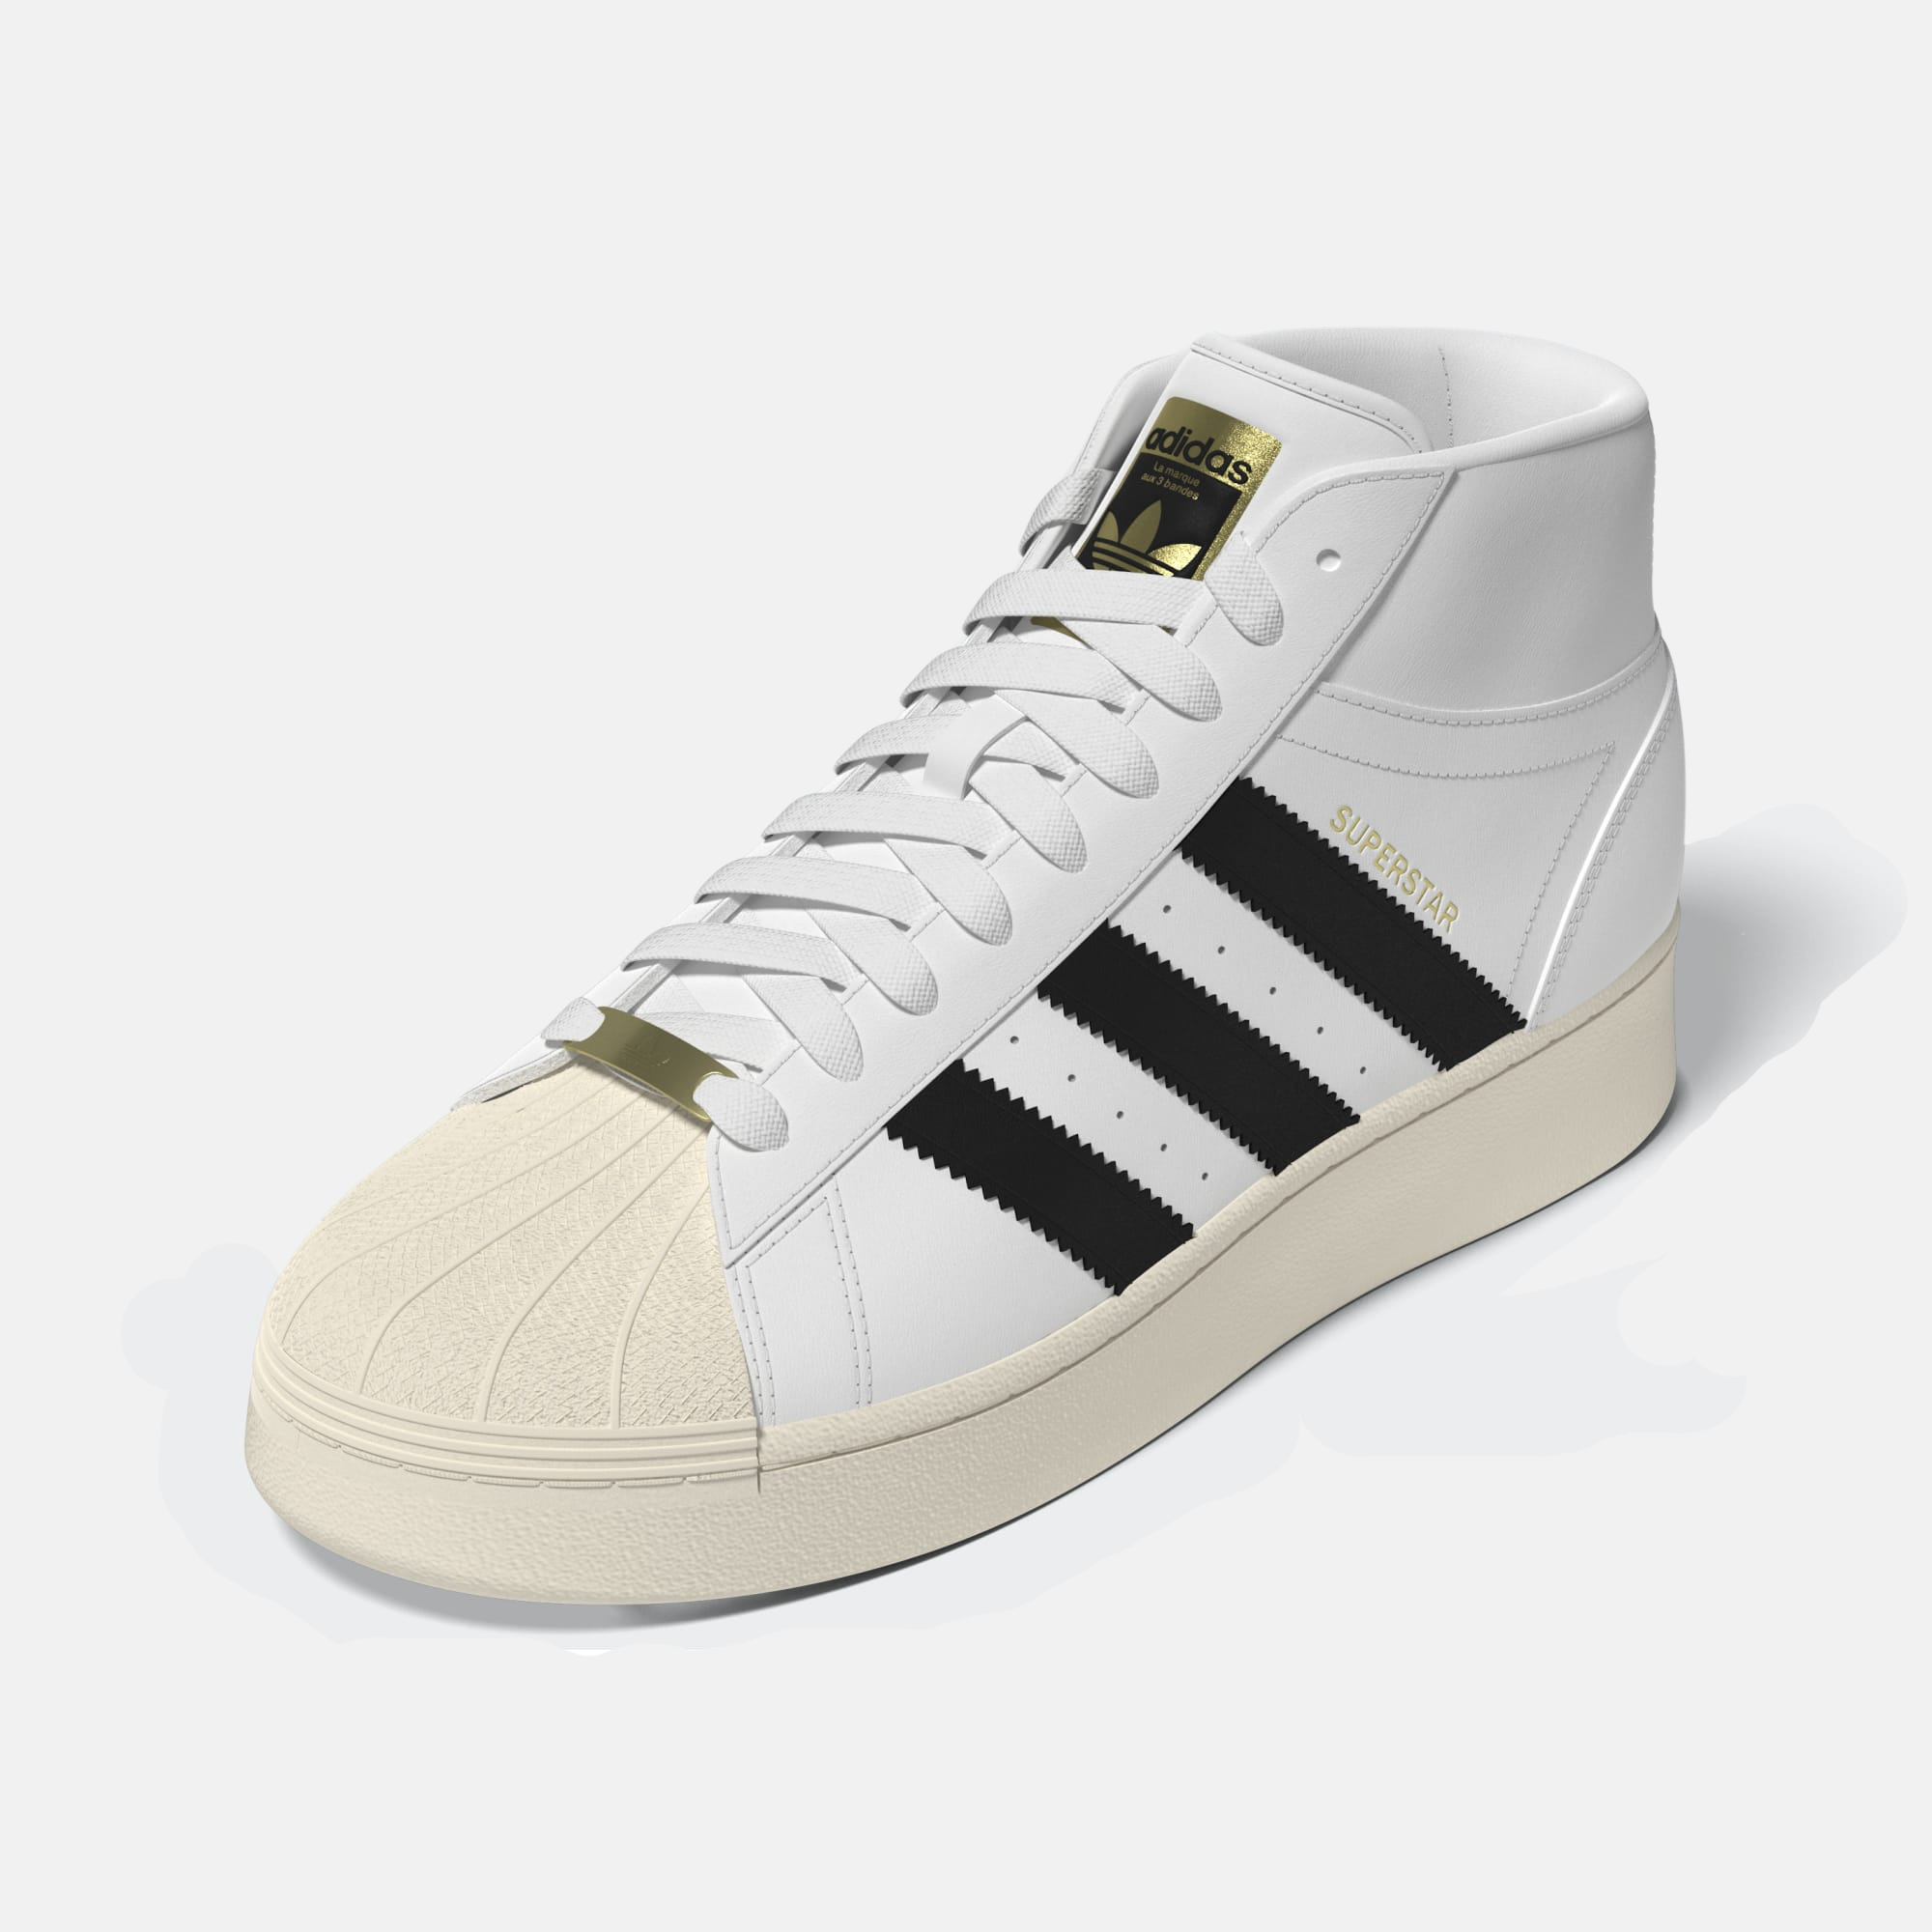 Adidas Superstar XLG Mid Vintage White Black